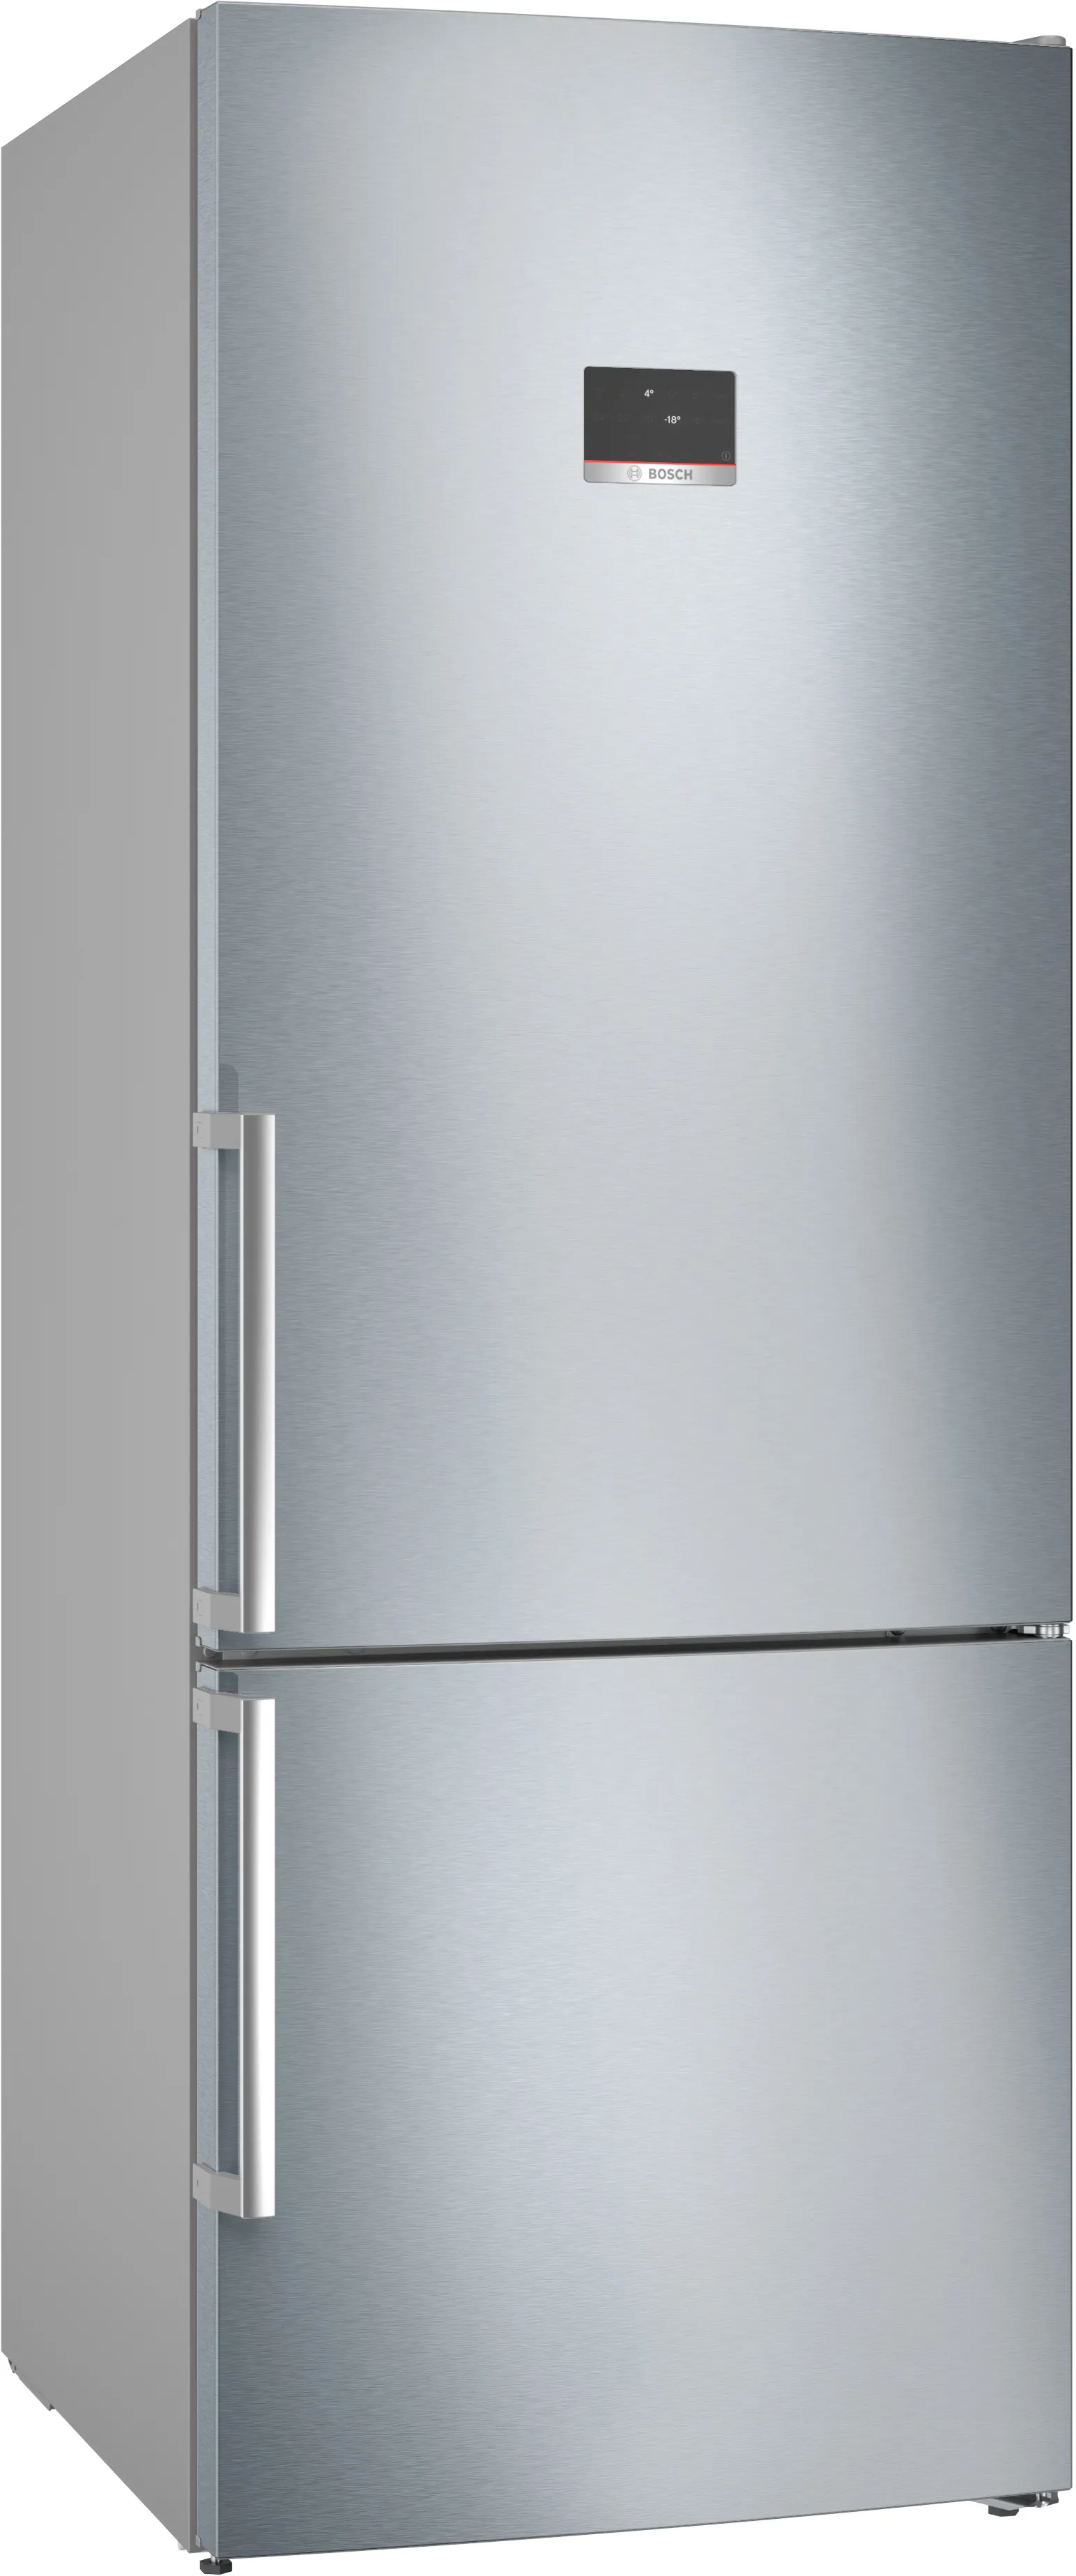 Series 4 Freestanding Refrigerator with Bottom Freezer 193 x 70 cm Brushed steel anti-fingerprint 